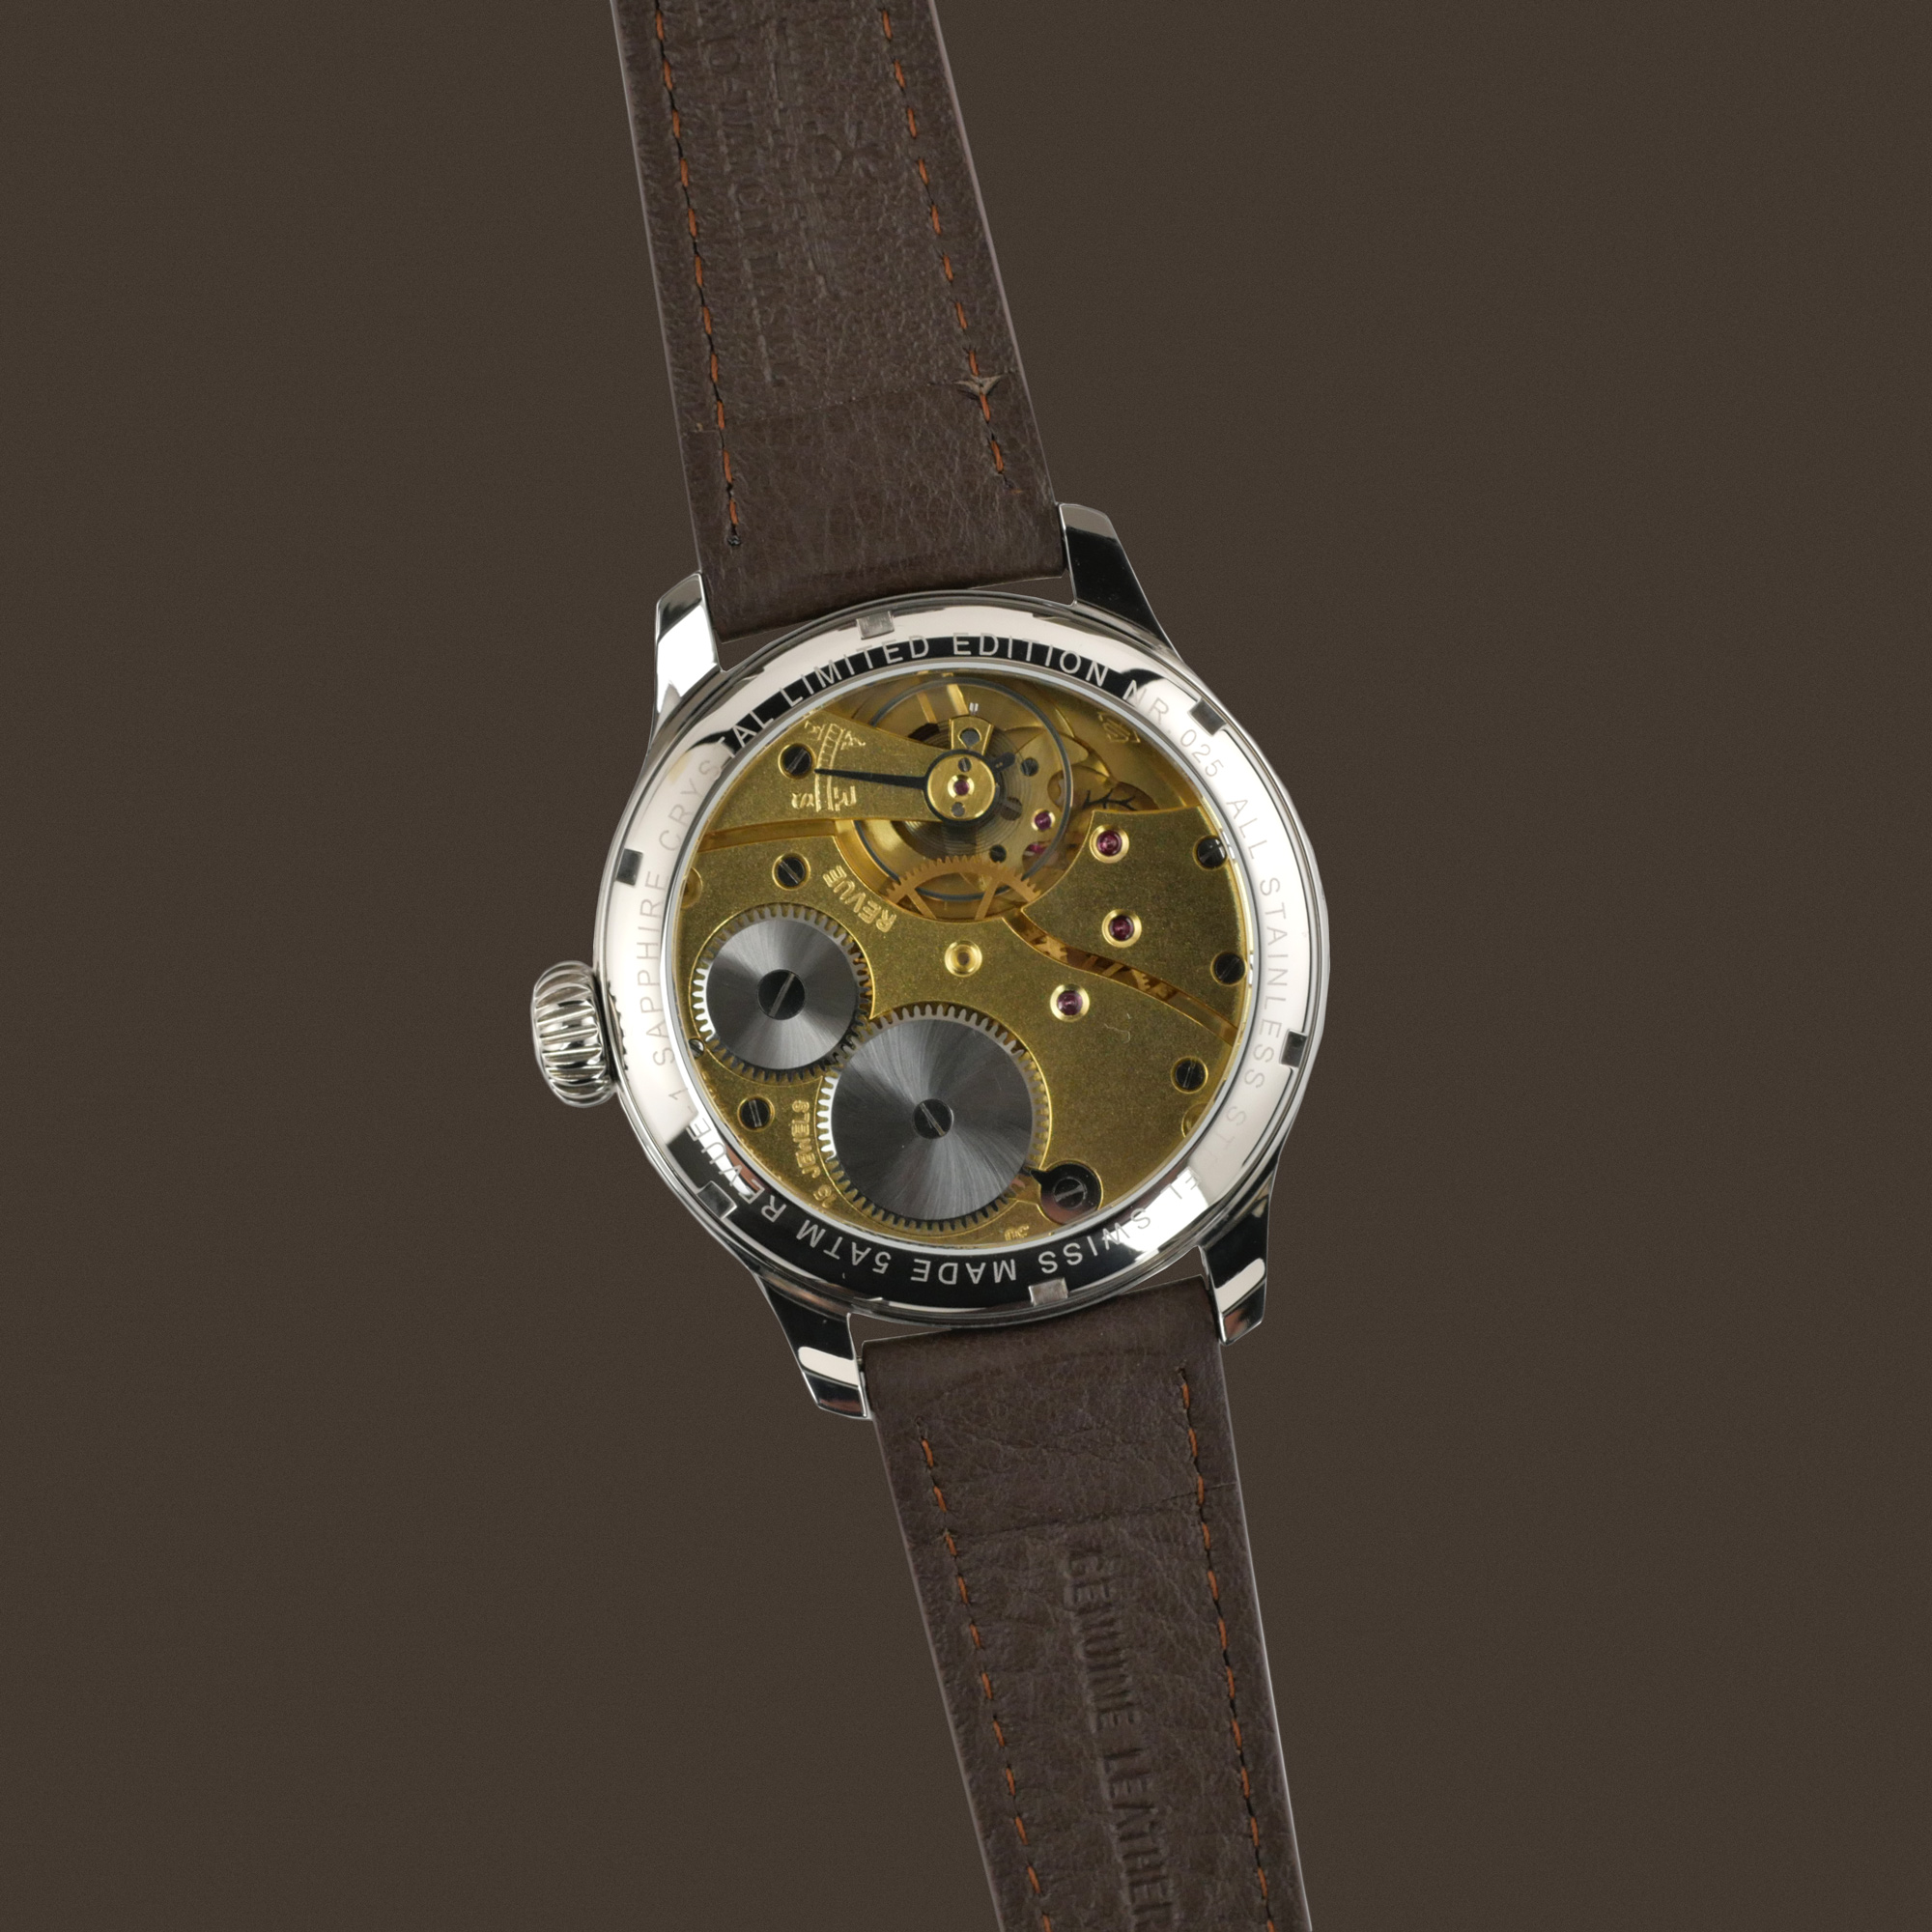 Zeno-Watch Basel Men's Watch Revue Manual Pocket Watch - Limited Edition 1462-I3